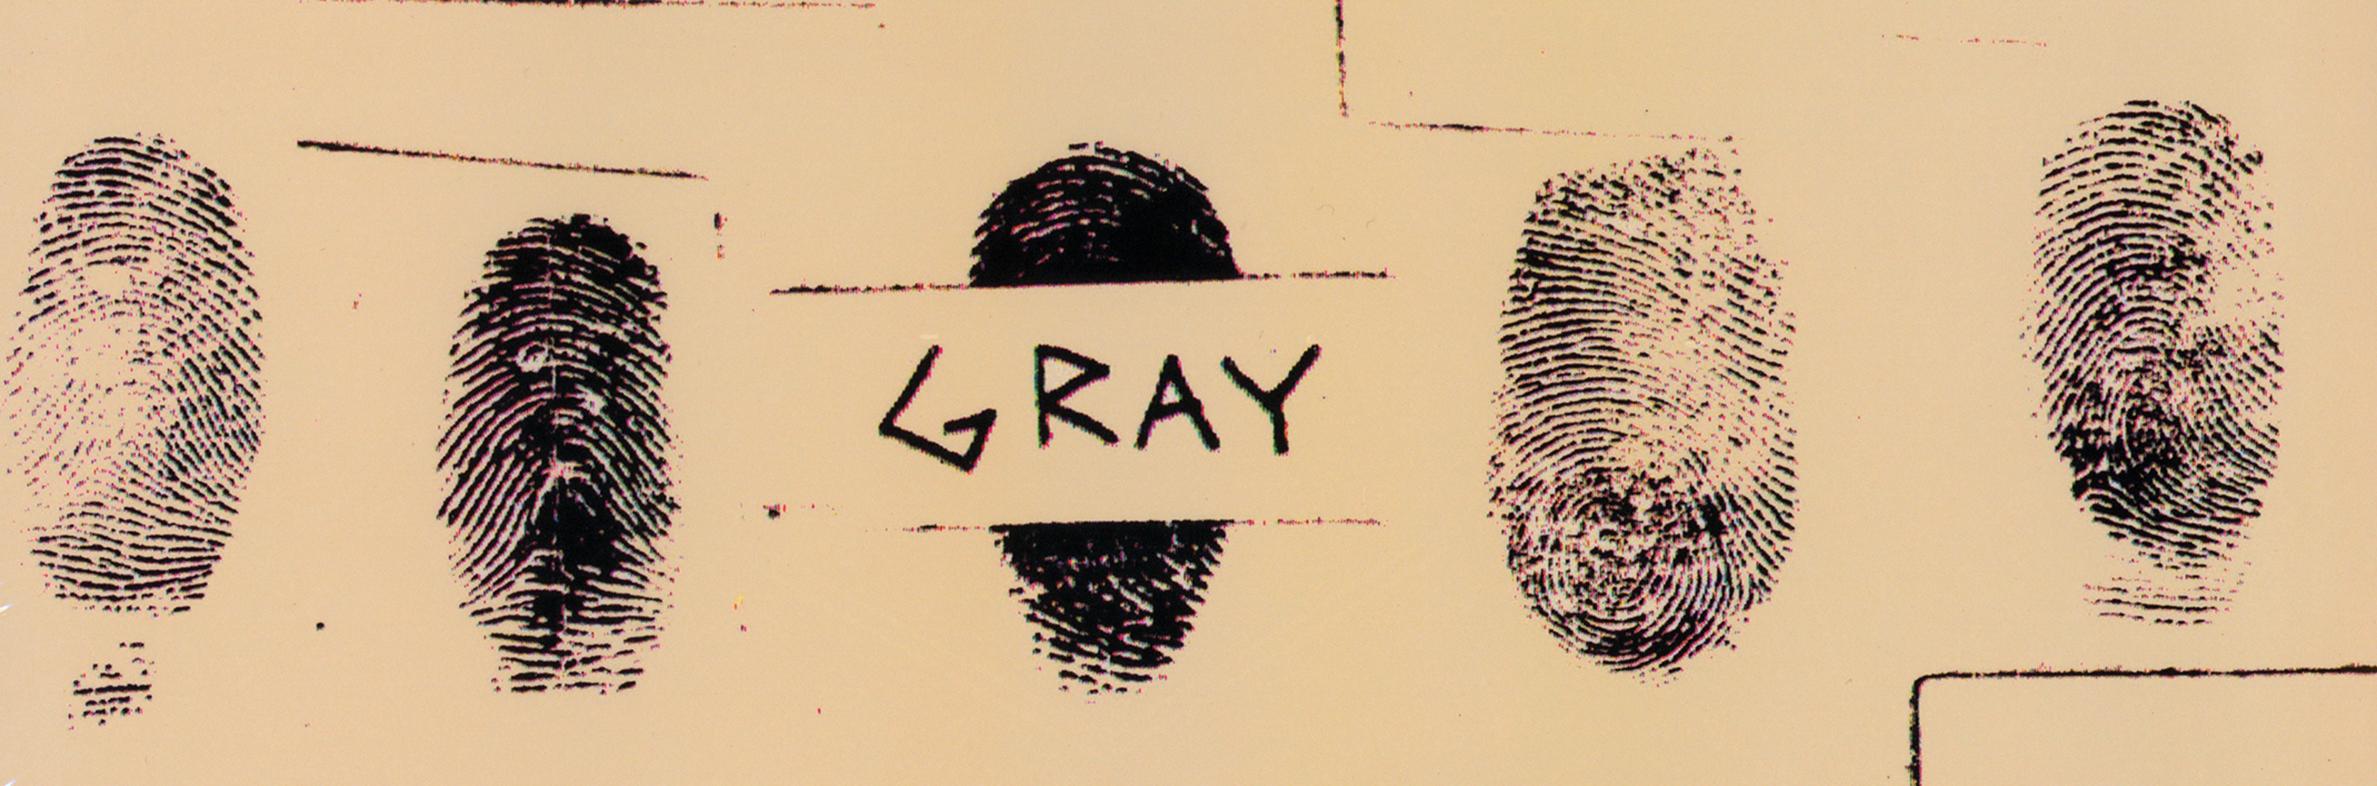 Basquiat Gray vinyl record signed (Basquiat Record Art) - Pop Art Mixed Media Art by Jean-Michel Basquiat